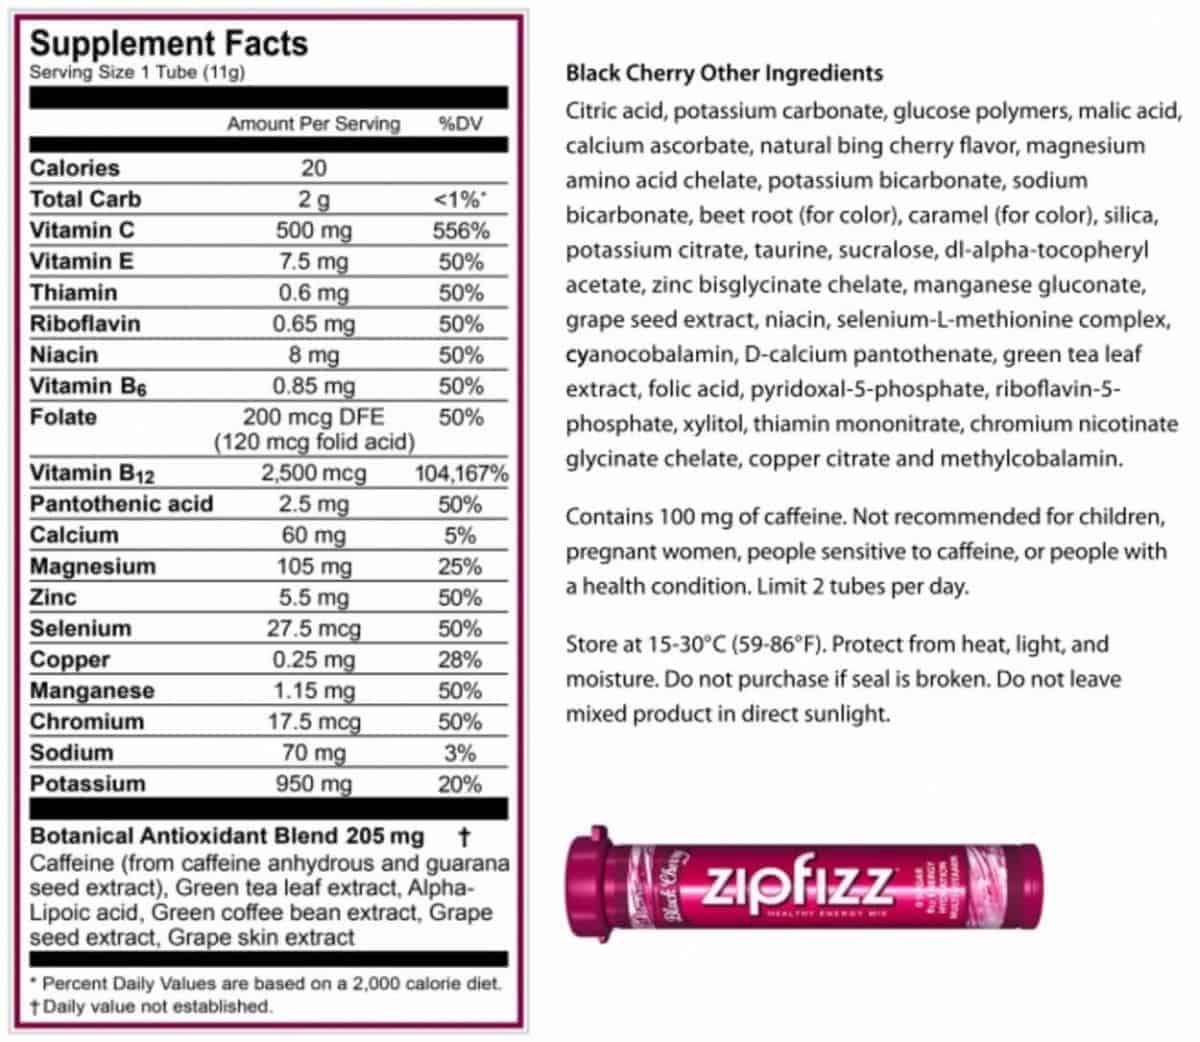 Nutrition facts of Zipfizz black cherry.